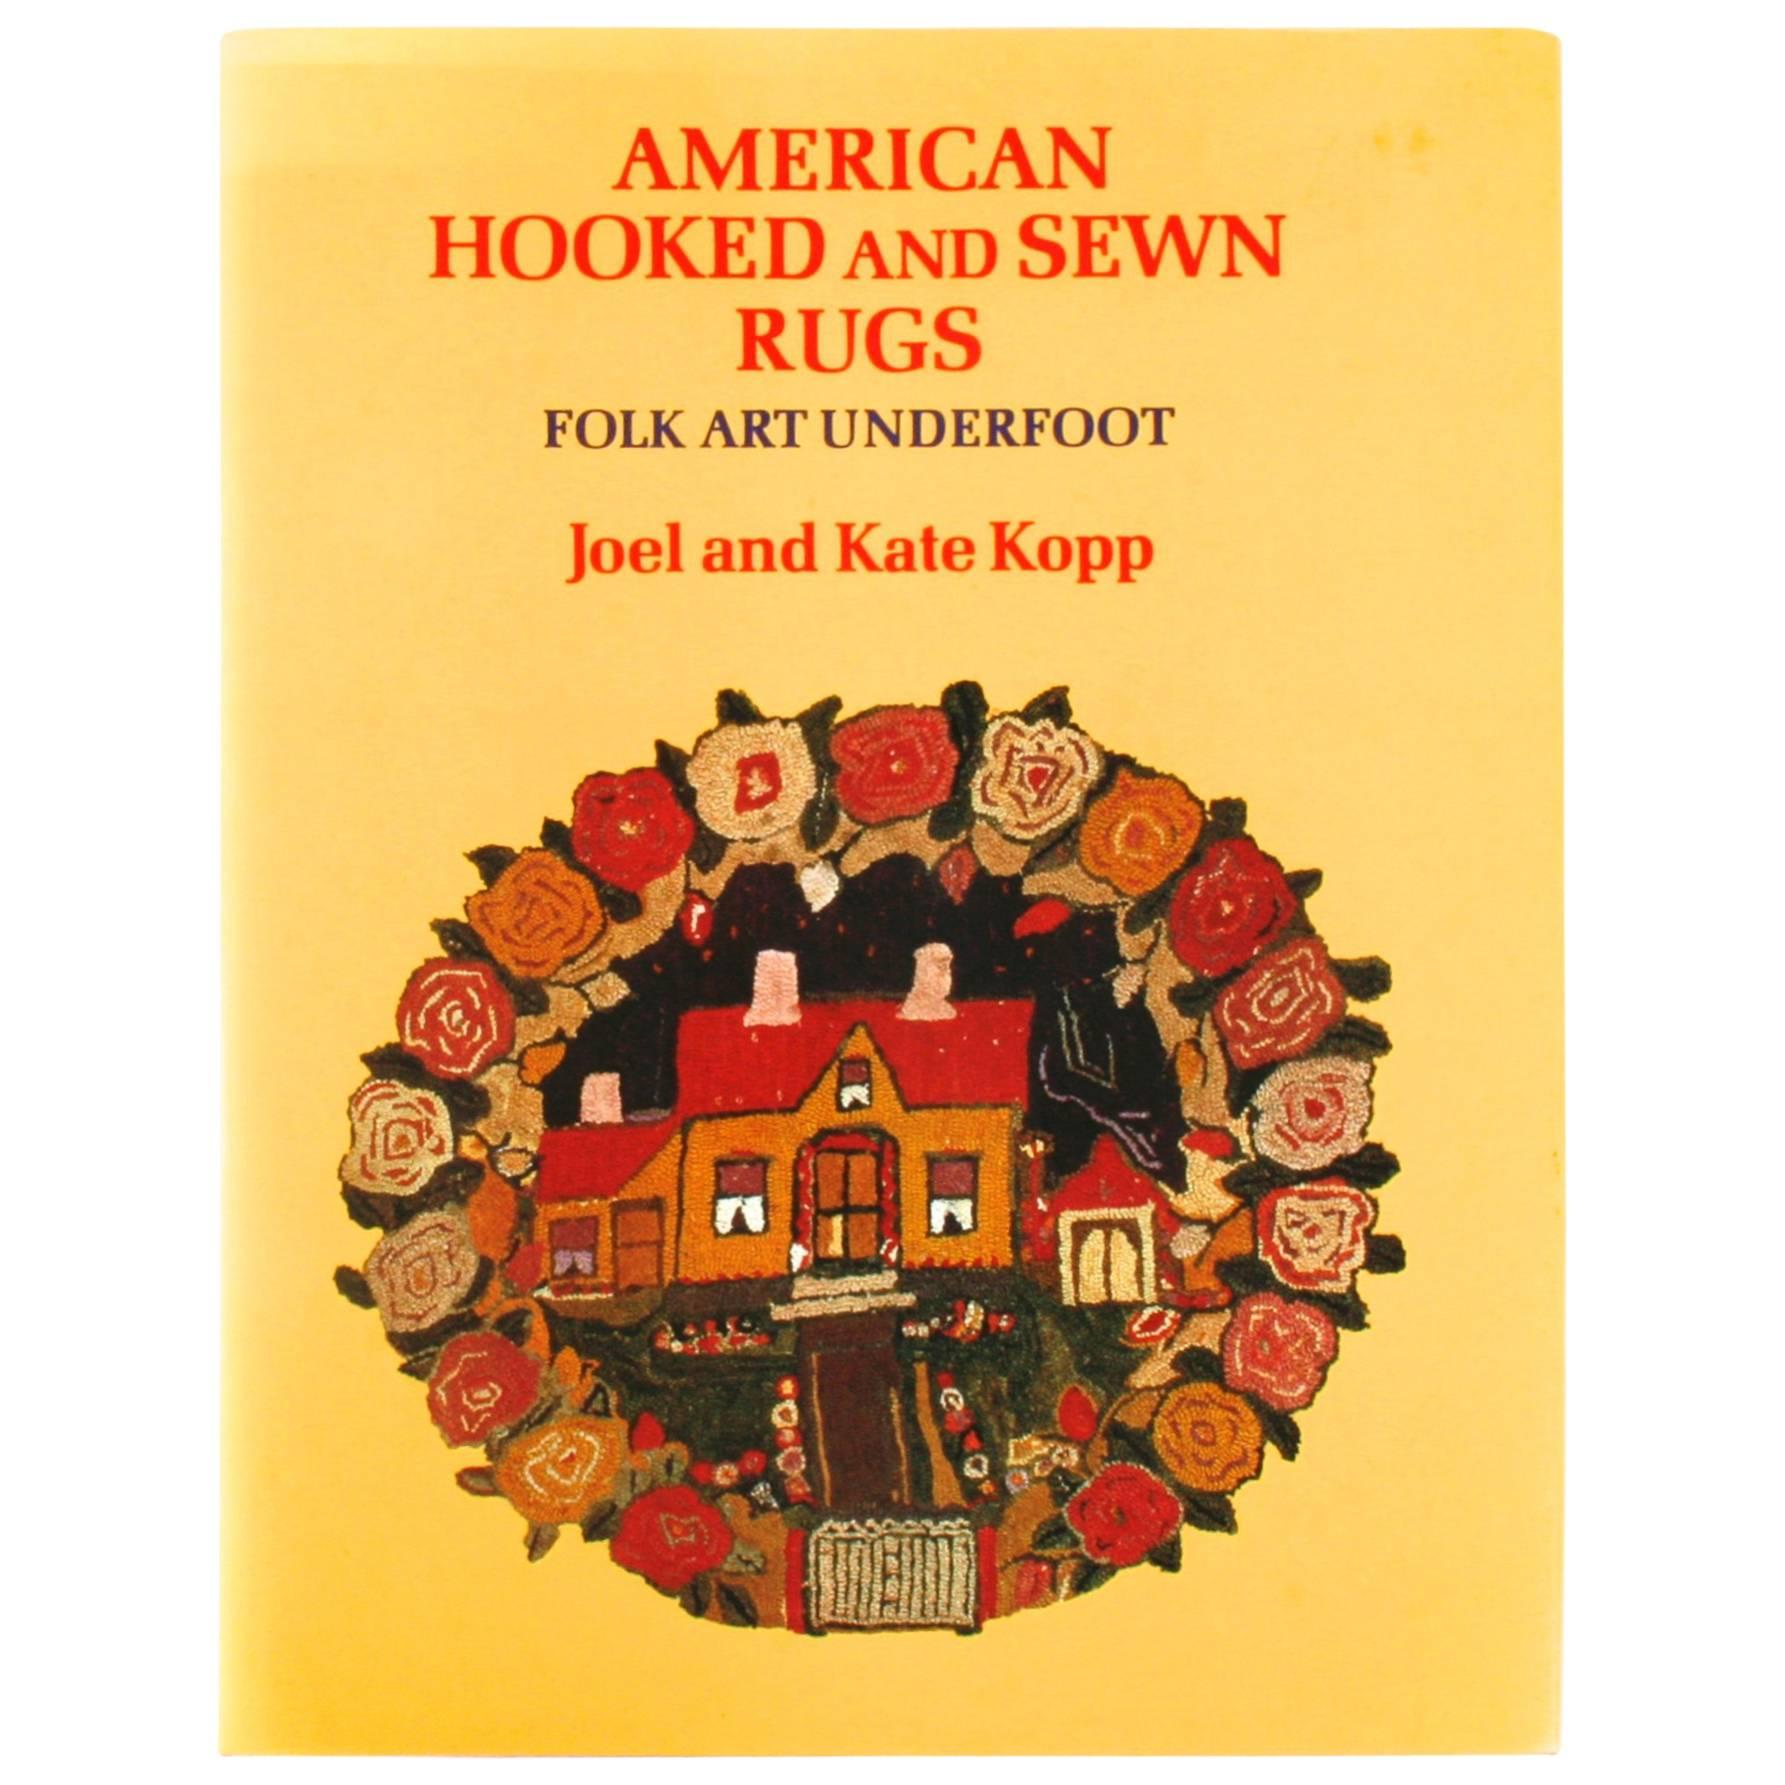 American Hooked and Sewn Rugs, Folk Art Underfoot by Joel and Kate Kopp